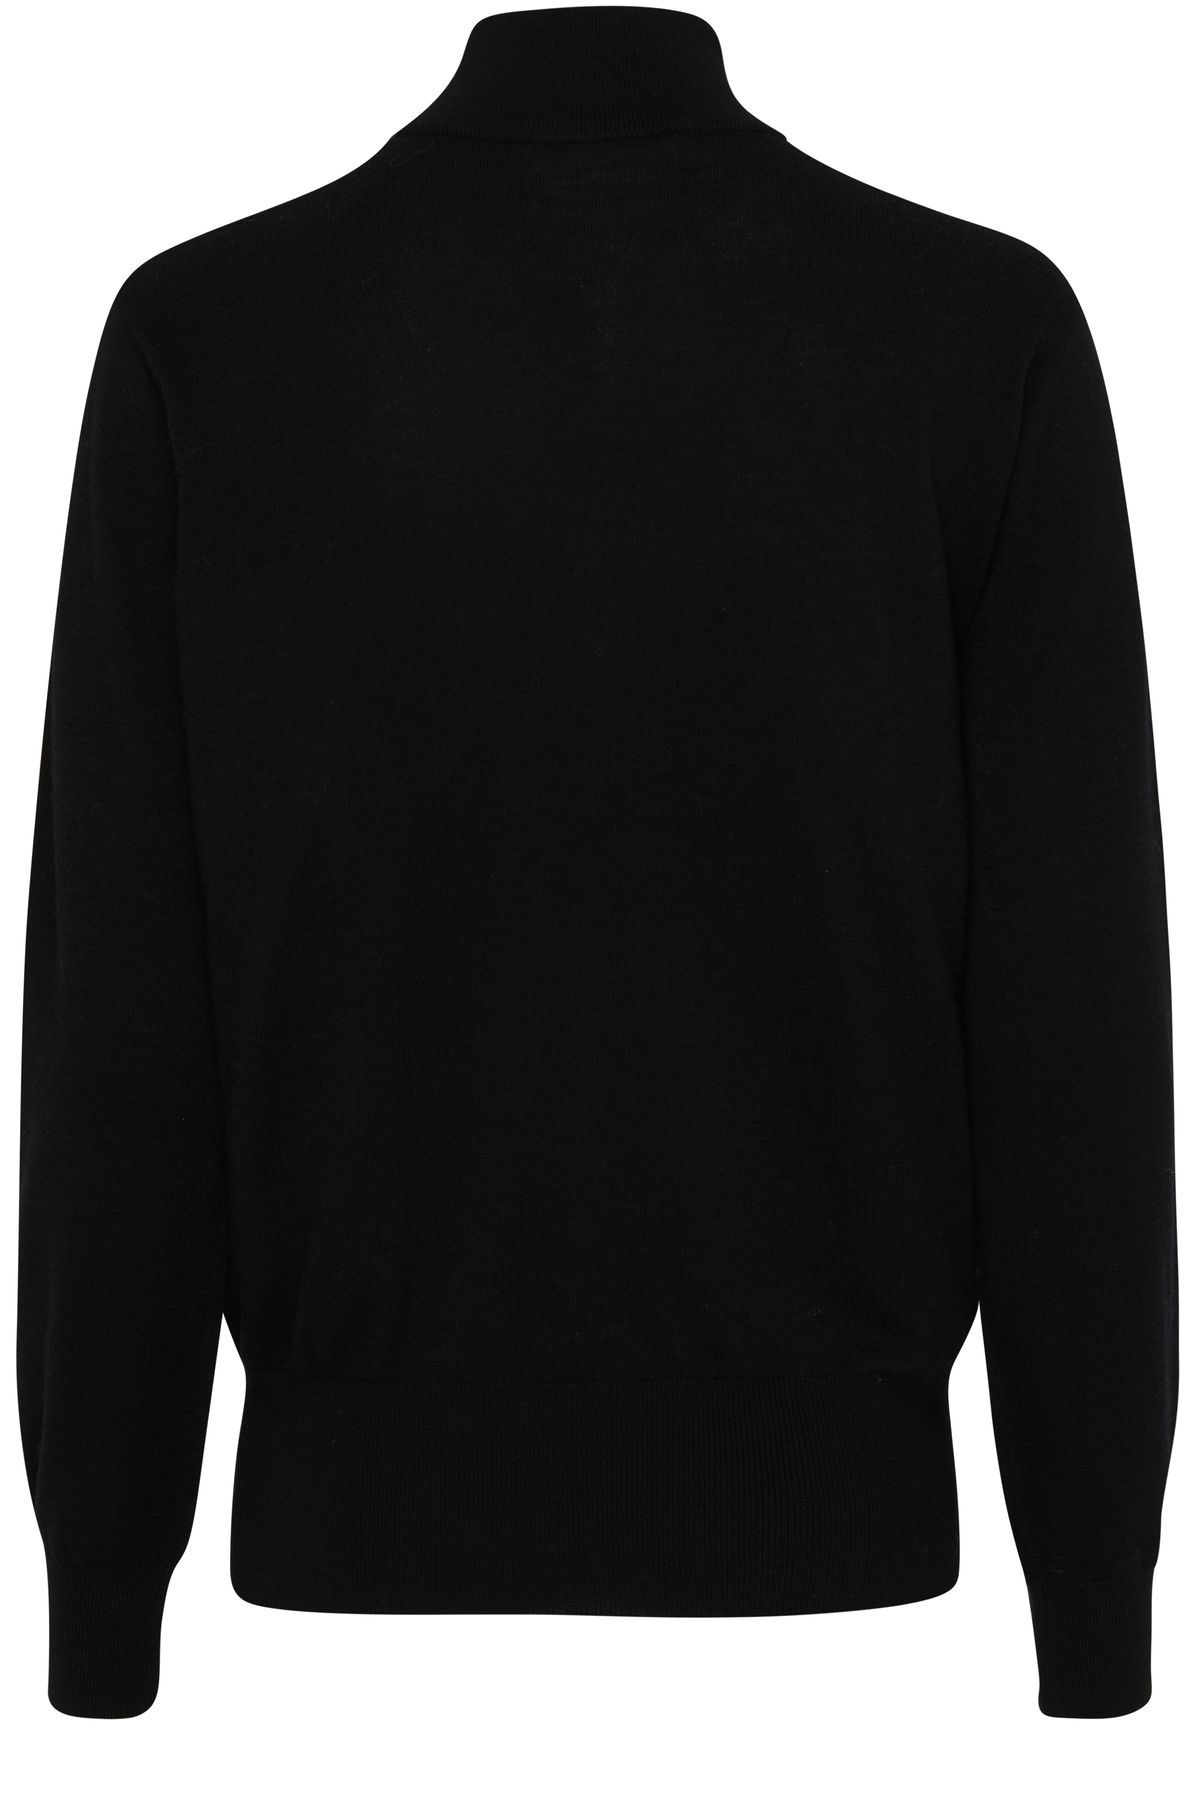 Lisa Yang Ophelia cashmere sweater